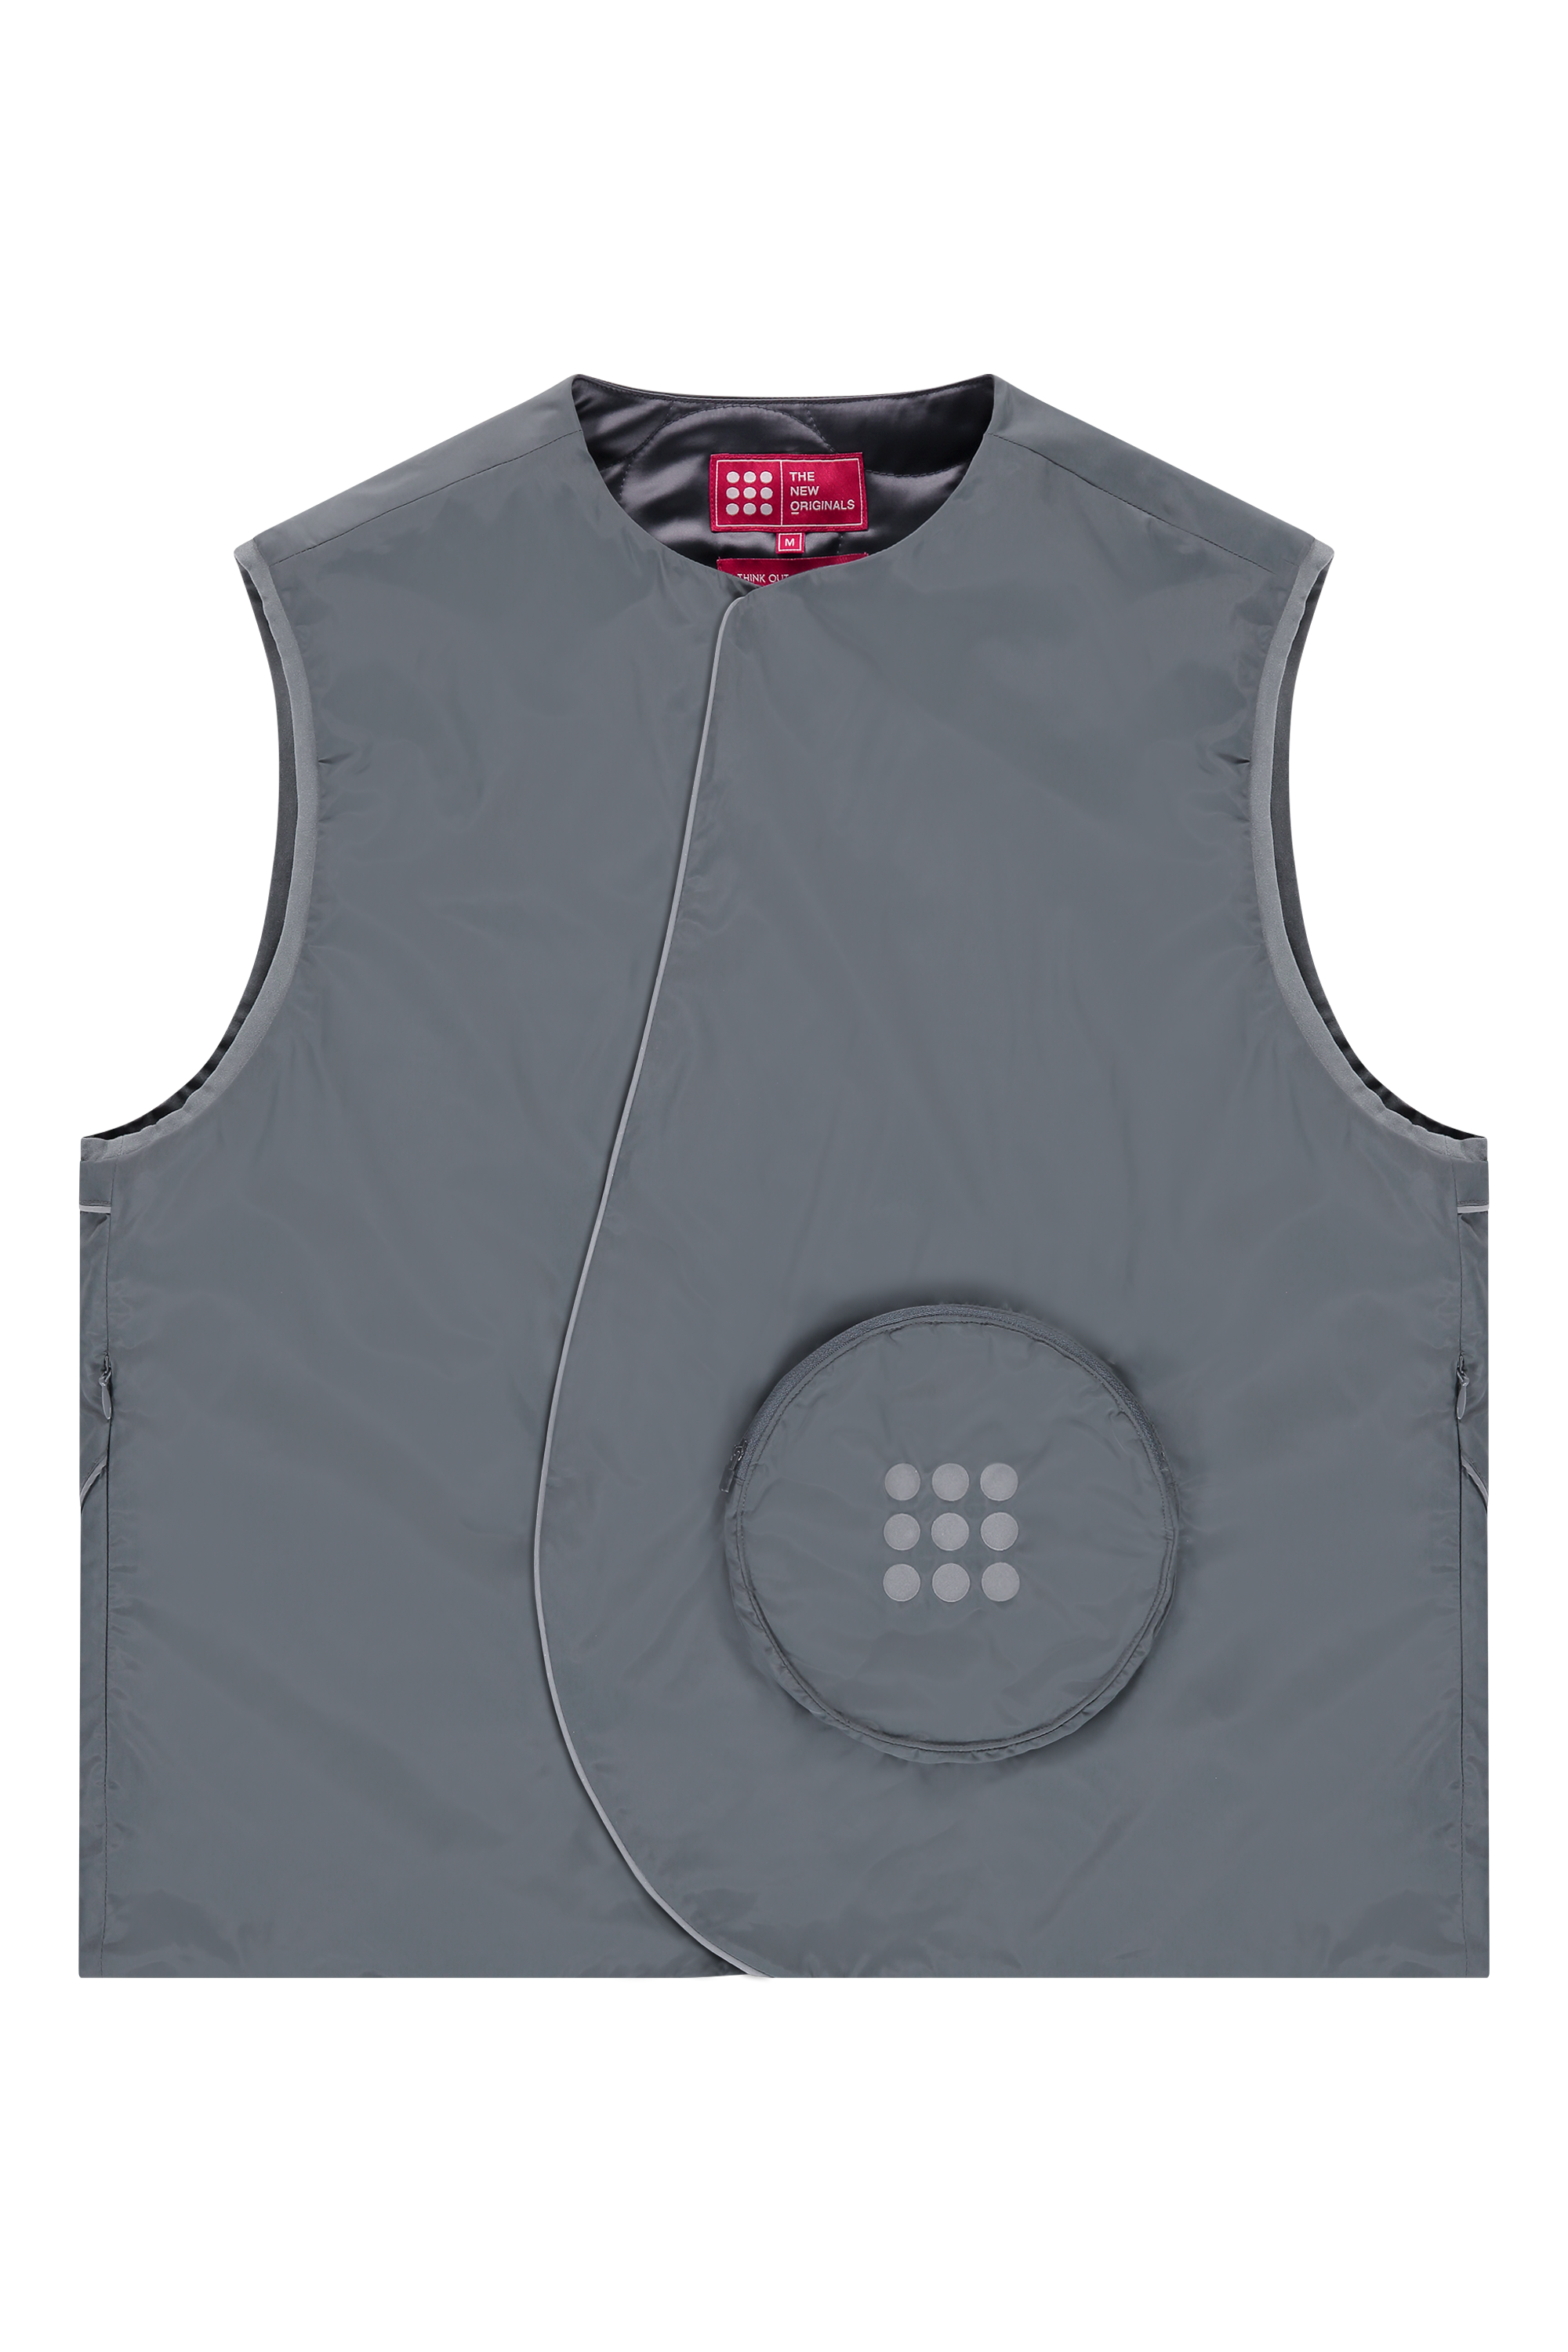 packshot 9-dots-walkman-vest